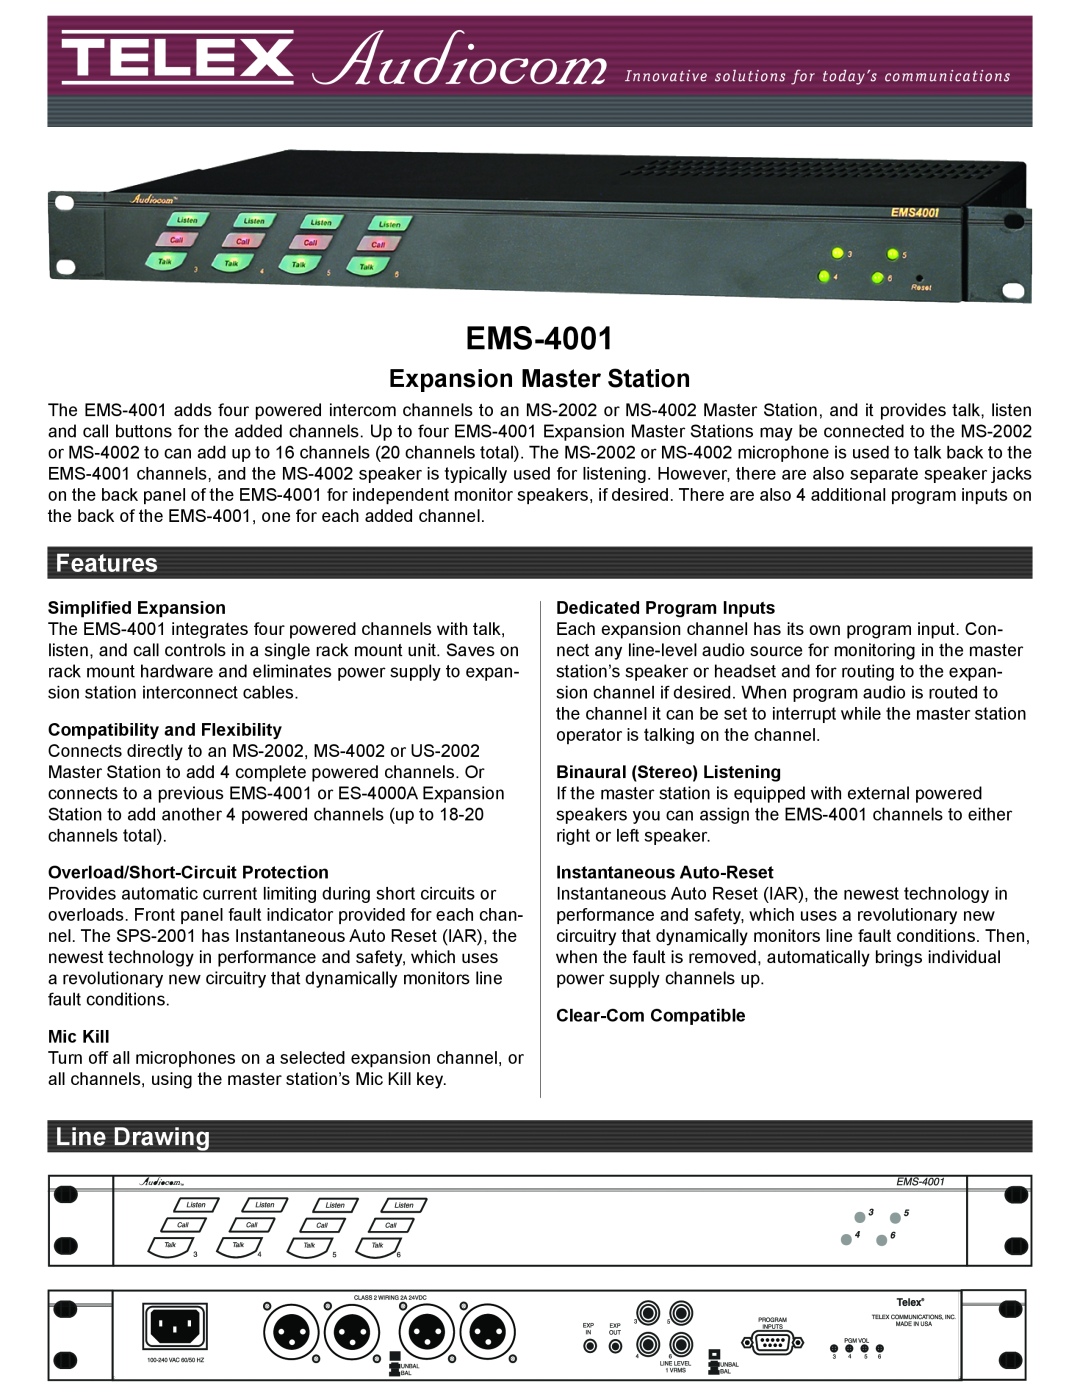 Telex manual Model EMS-4001Expansion Master Station, Audiocom Intercom Systems, User Instructions 